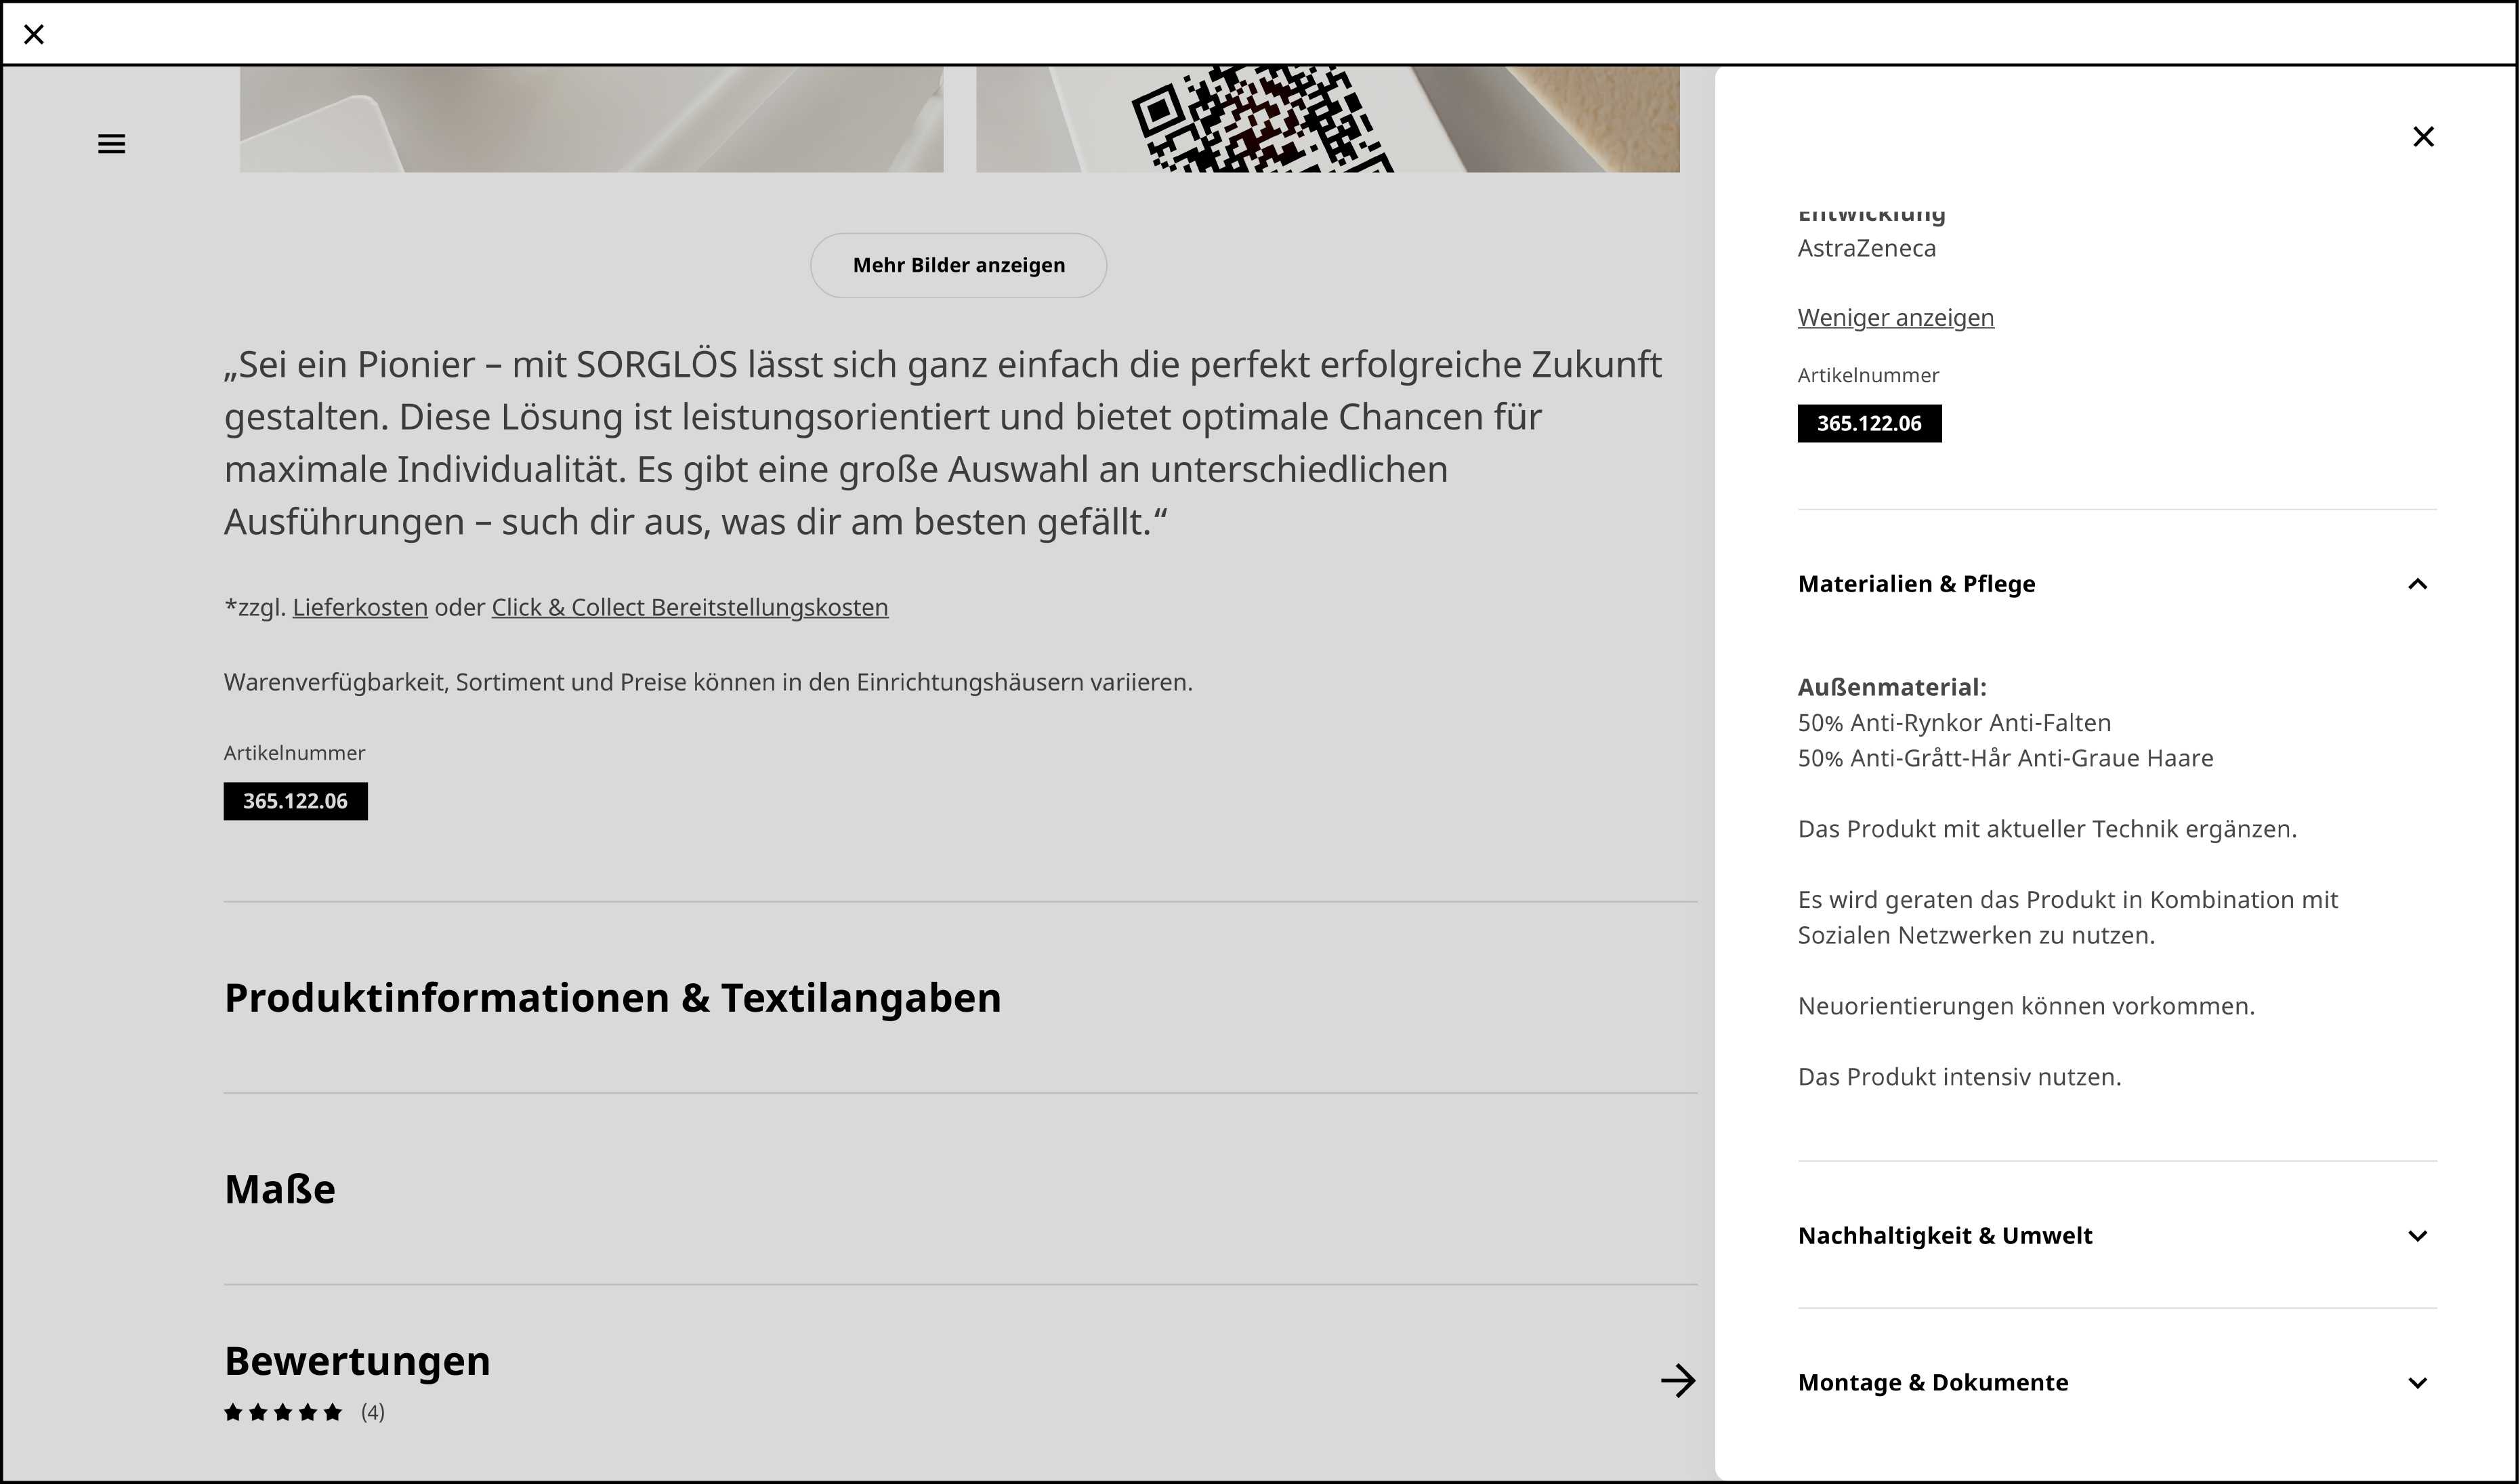 IKEA X AstraZeneca: Website product information